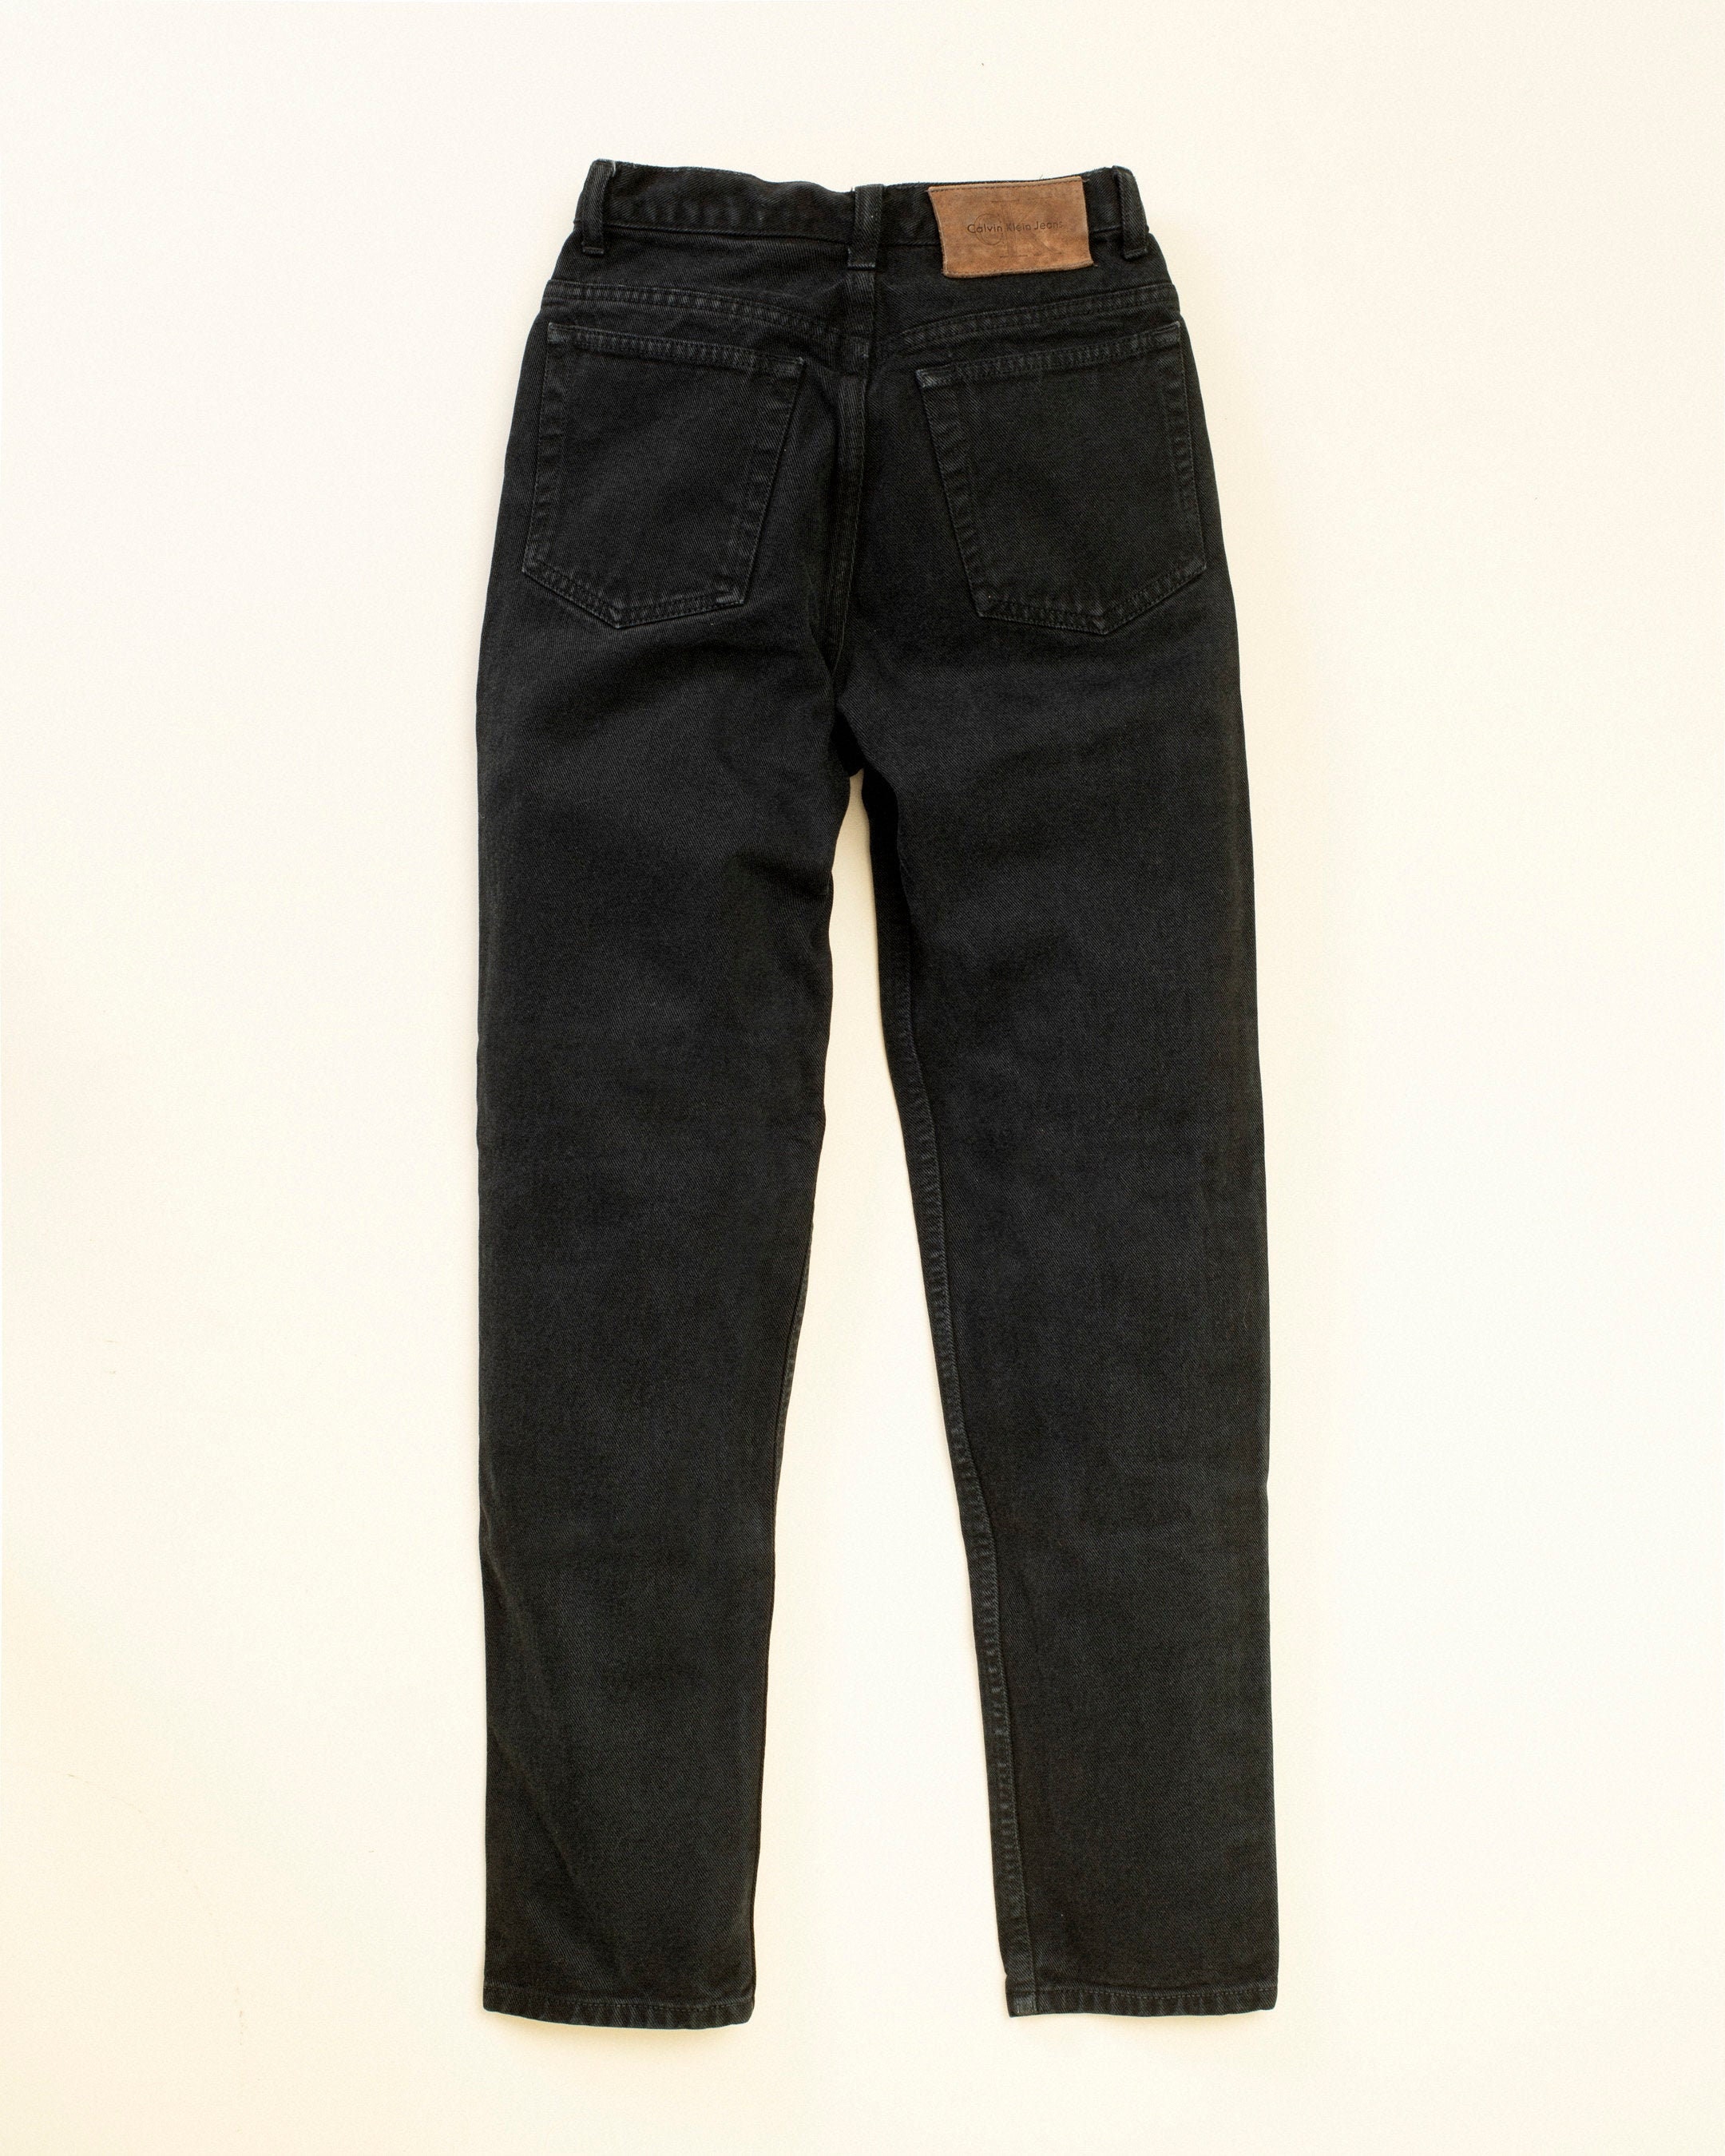 Vintage Black Calvin Klein Jeans | Etsy